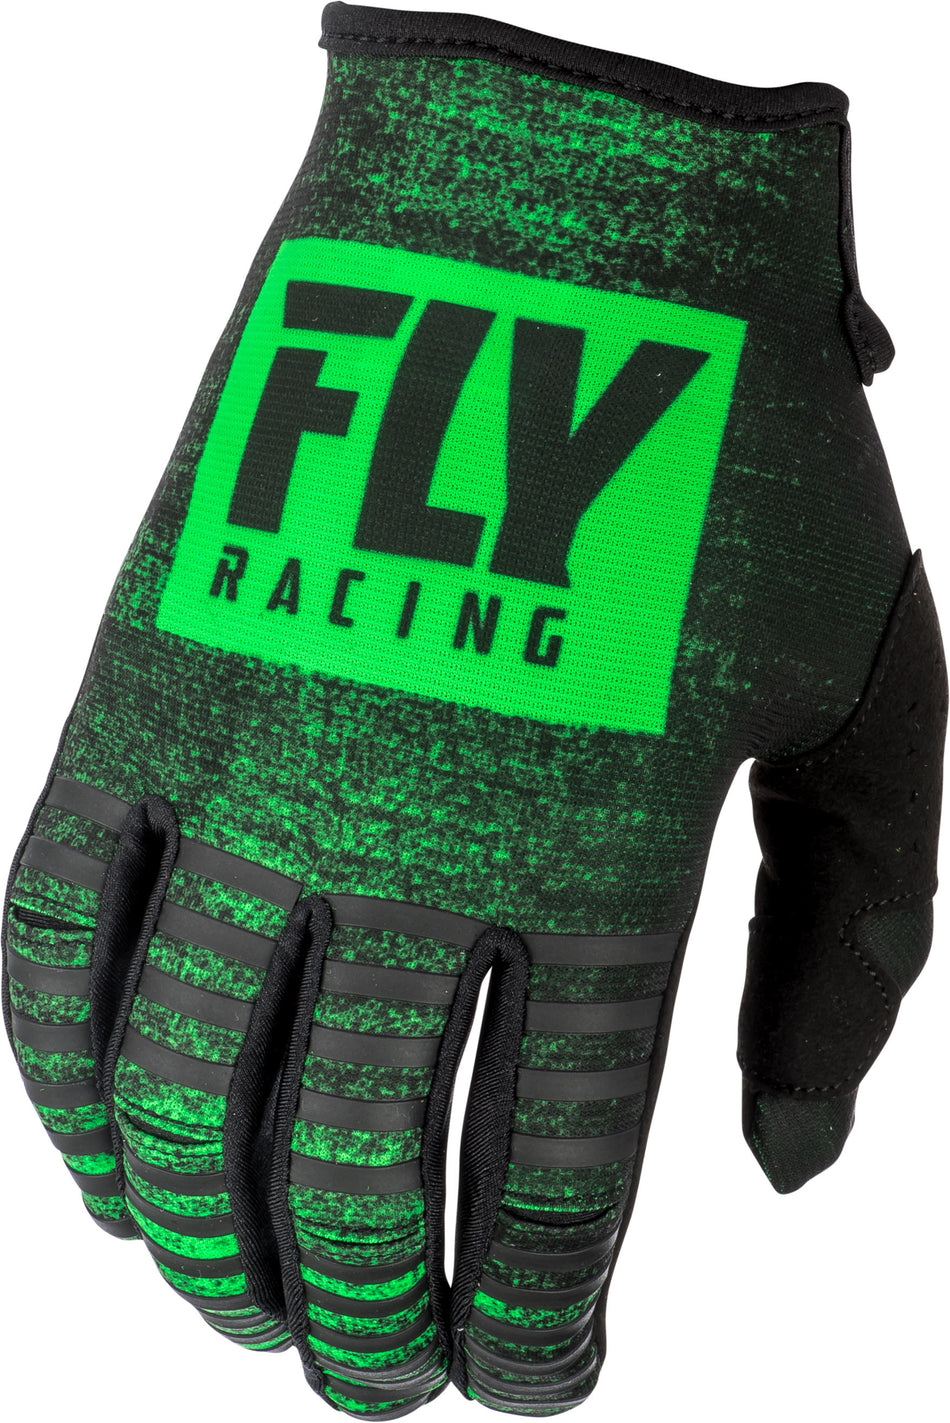 FLY RACING Kinetic Noiz Gloves Neon Green/Black Sz 06 372-51506